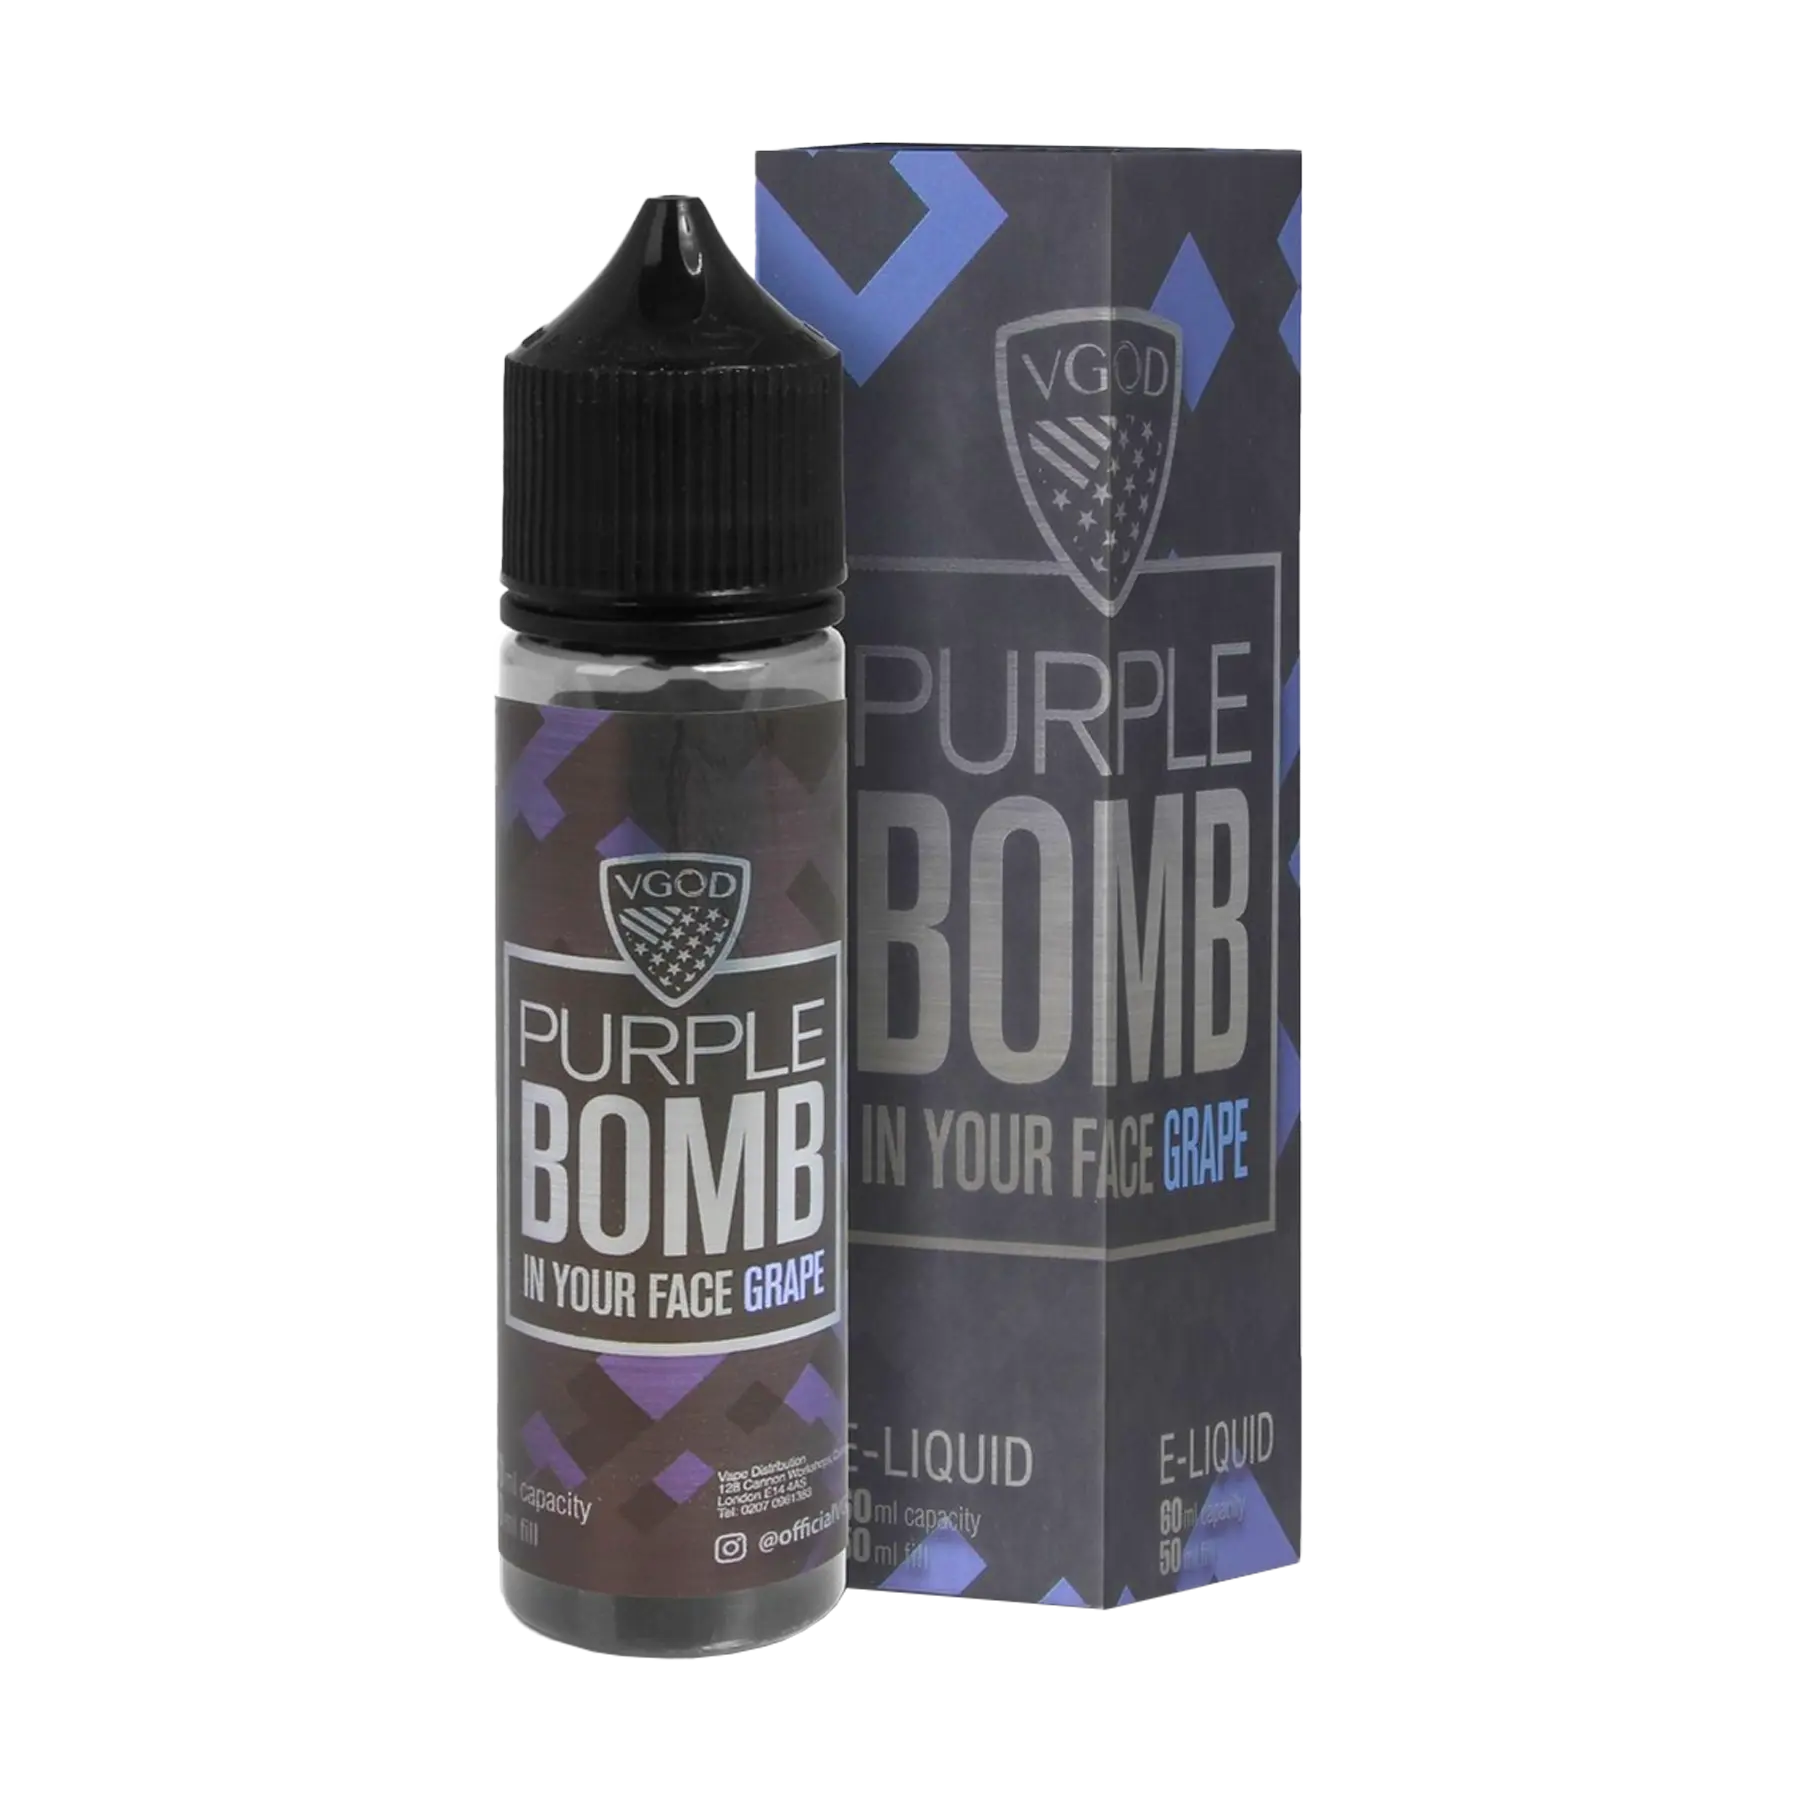 Vgod - Purple Bomb 50ml E Liquid Shortfill